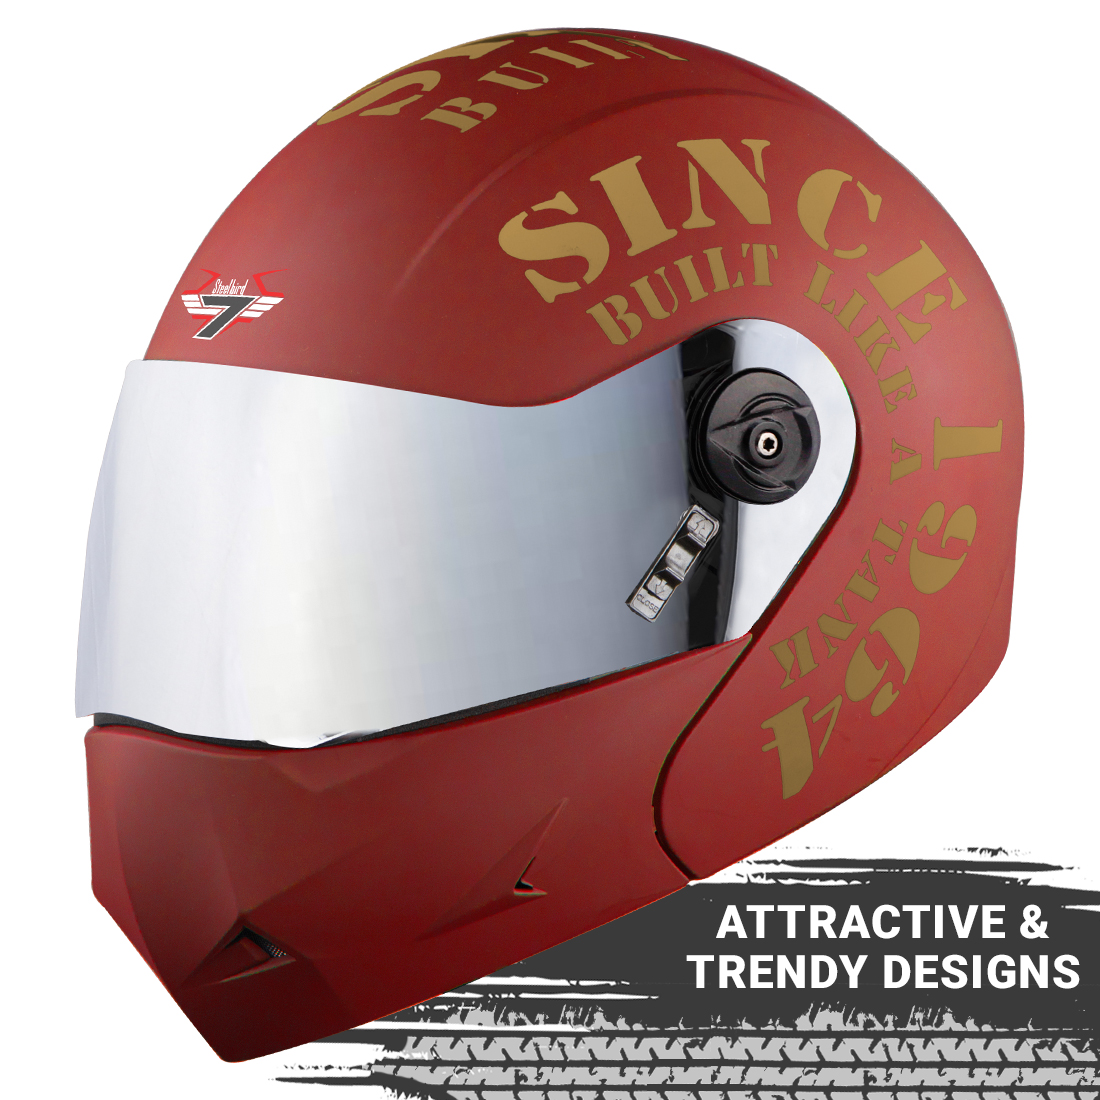 Steelbird SB-45 7Wings Award Tank Flip Up Graphic Helmet (Matt Maroon Gold With Chrome Silver Visor)